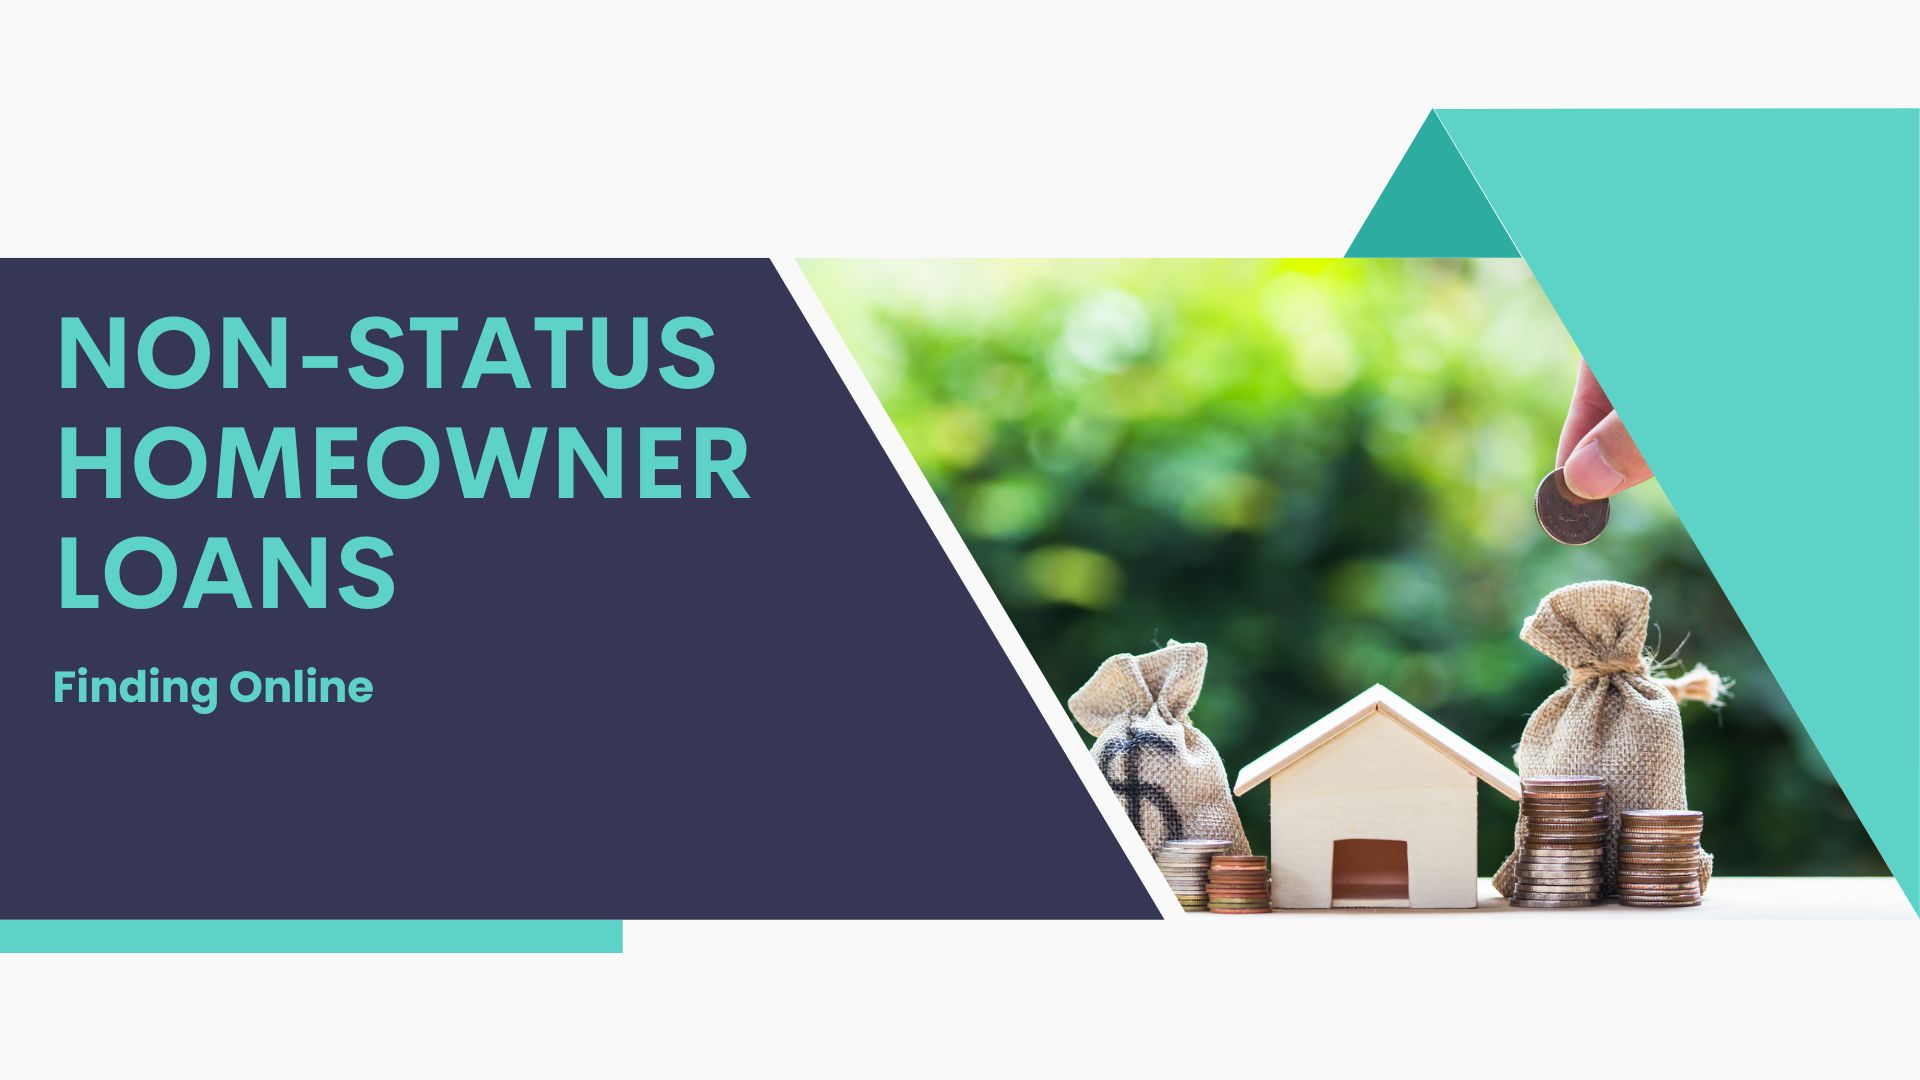 Finding Non-Status Homeowner Loans Online